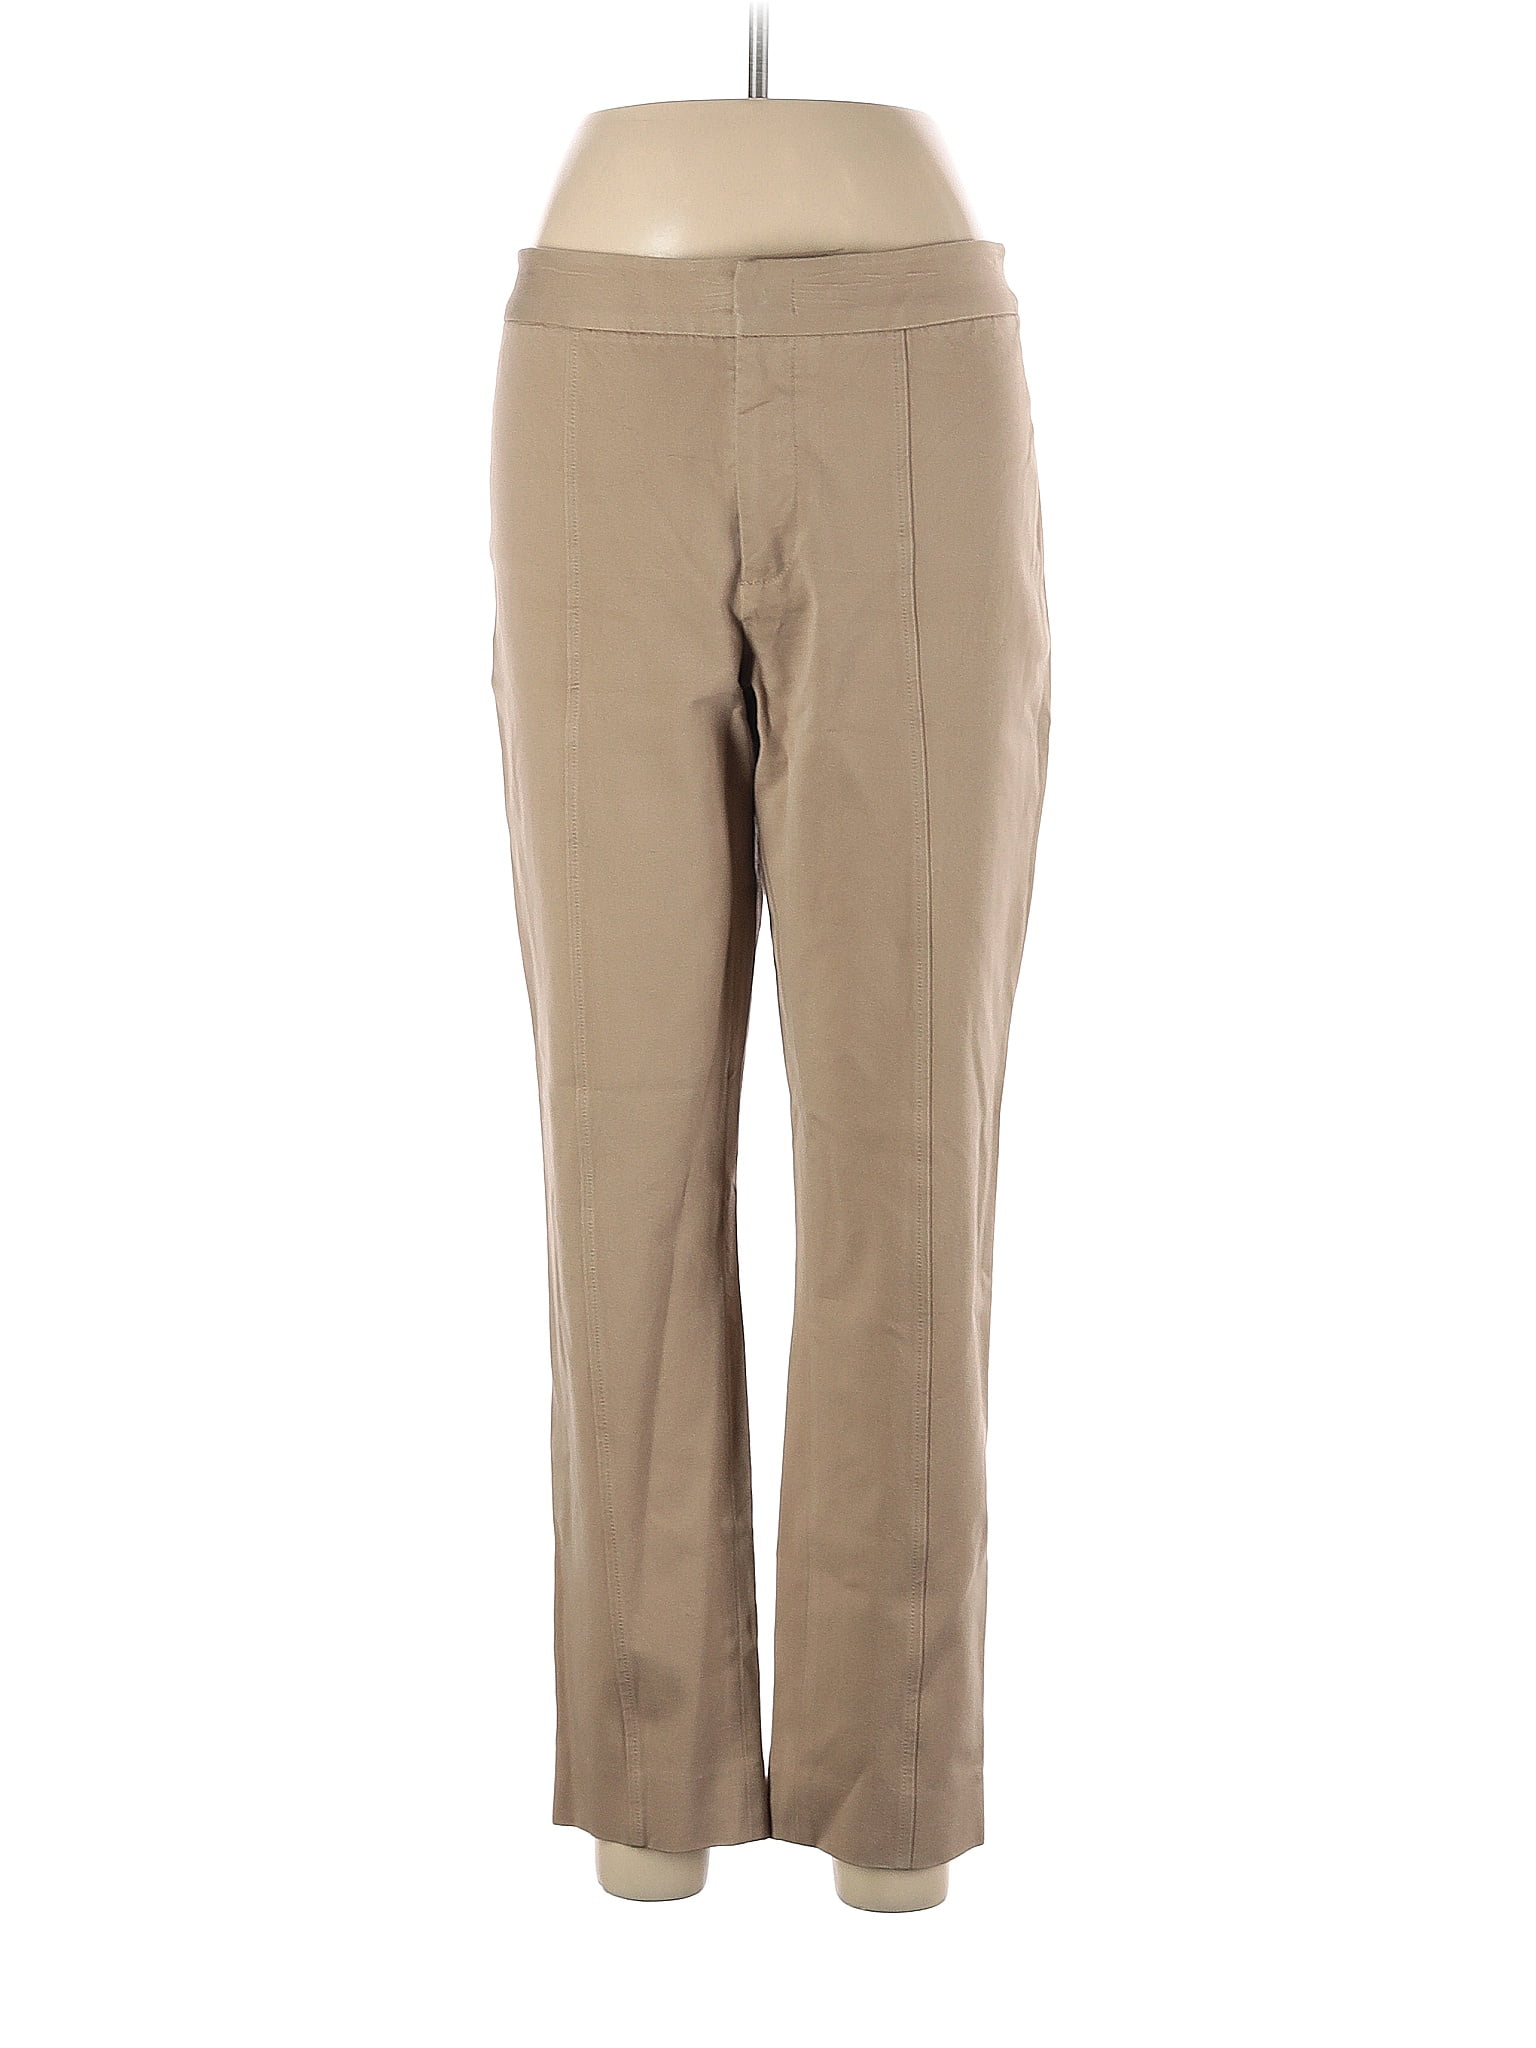 NYDJ Solid Brown Tan Dress Pants Size 6 - 92% off | thredUP